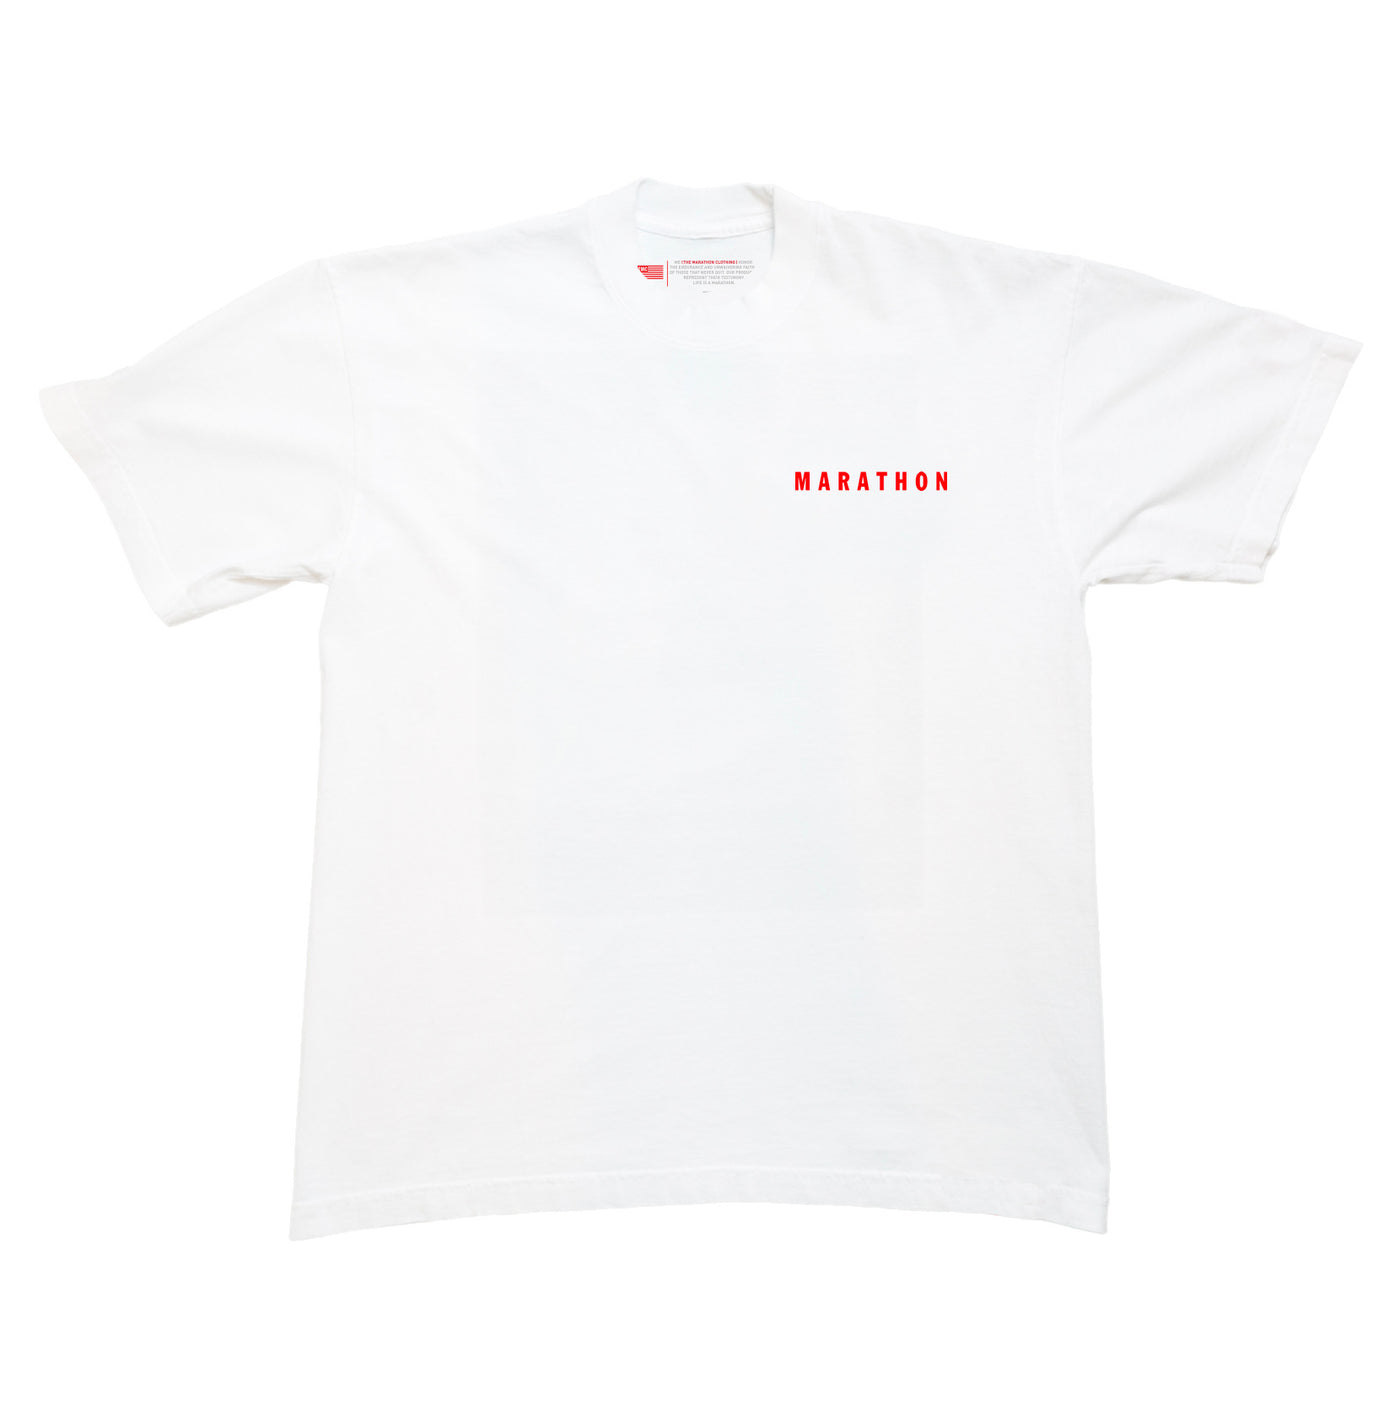 Marathon Signature T-Shirt - White/Red - Front